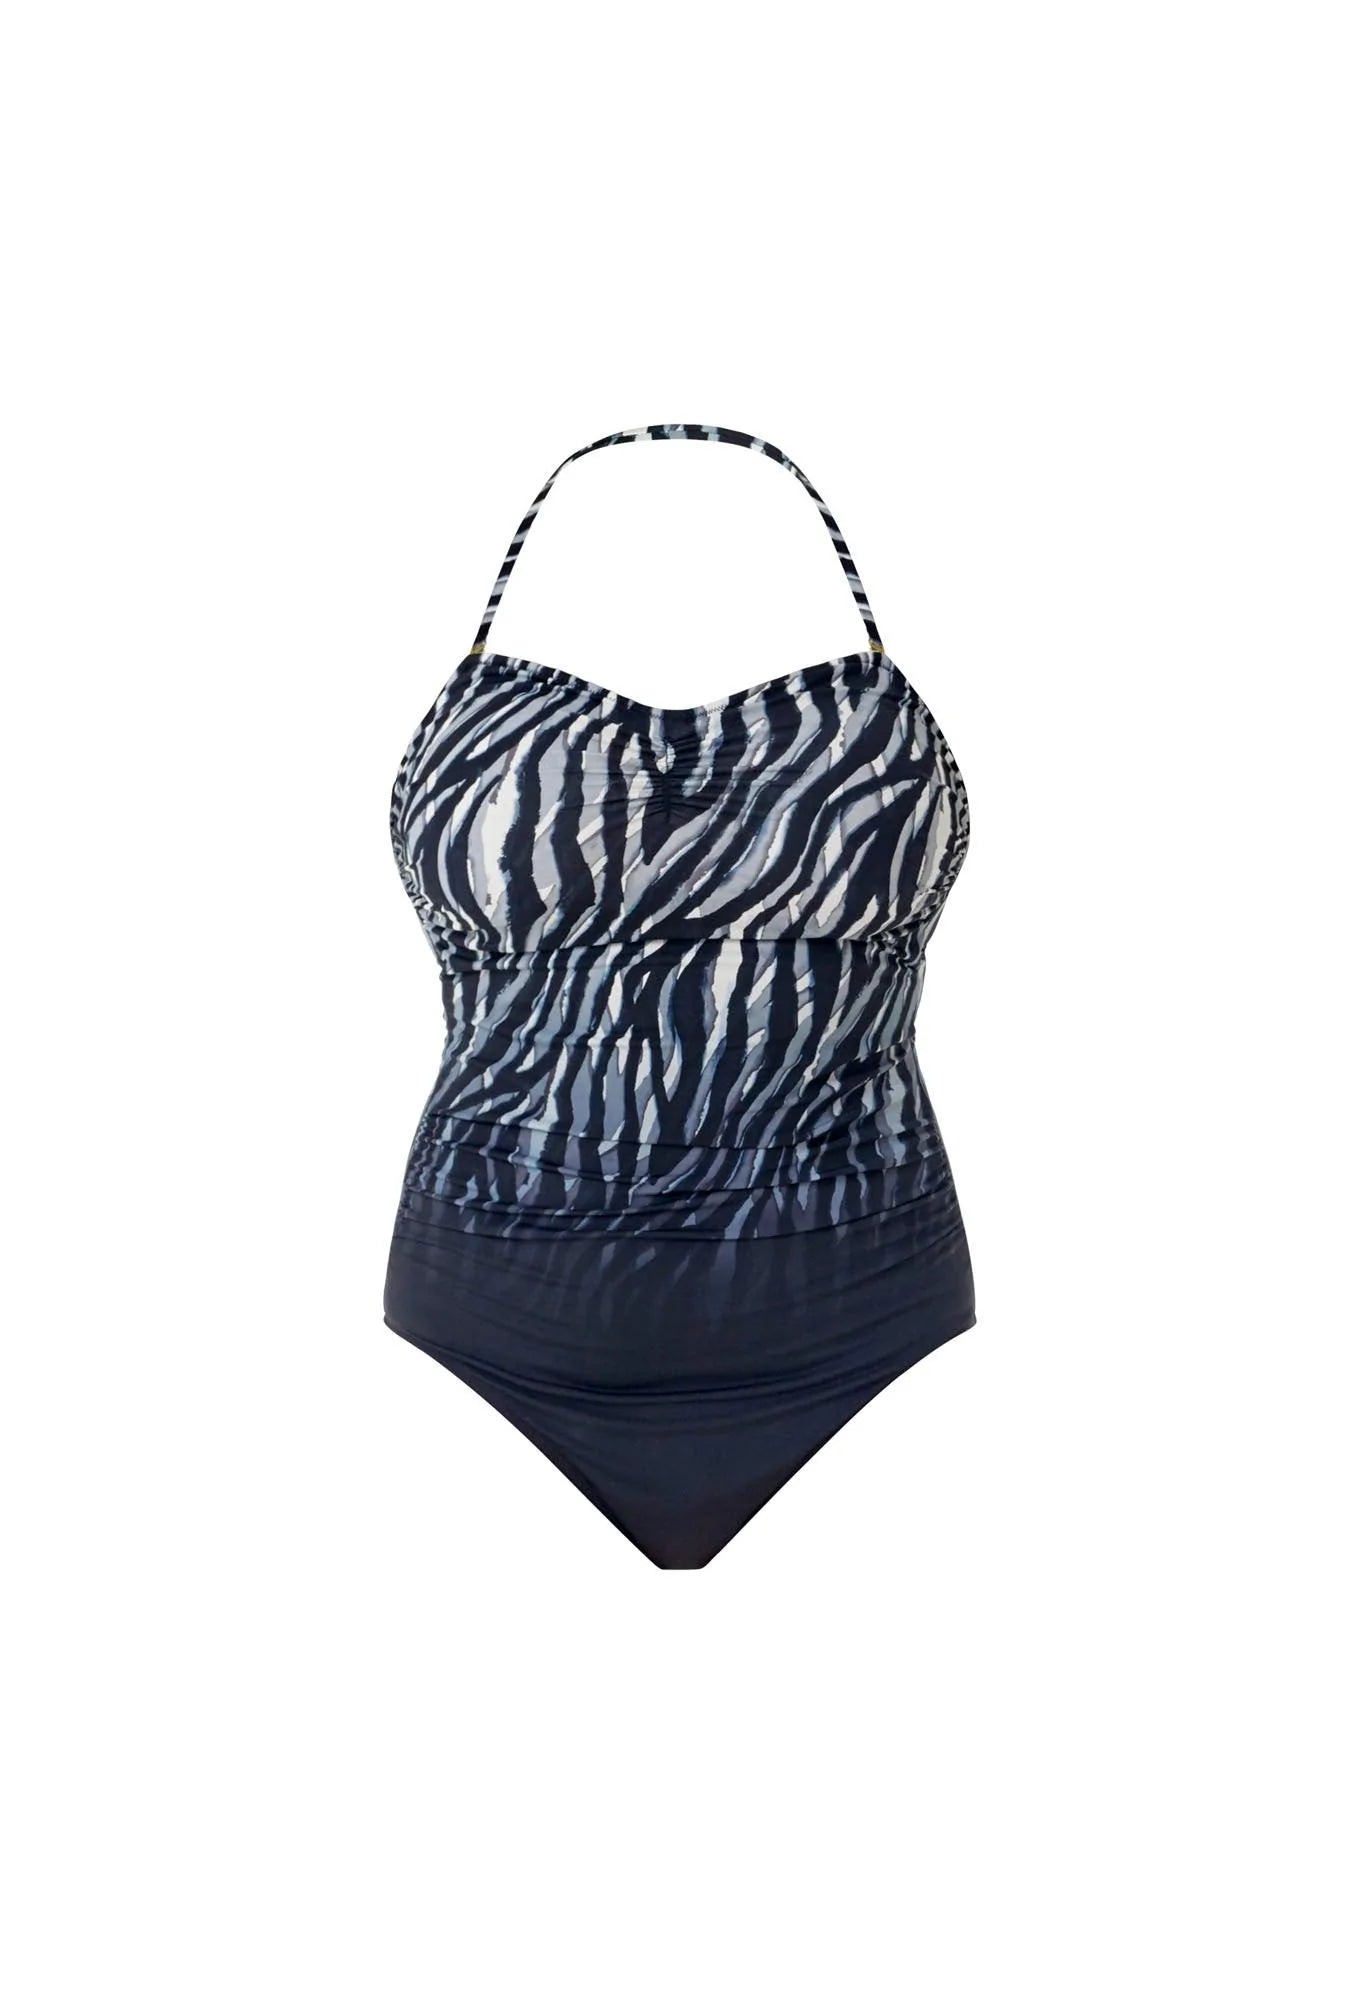 Seaspray Savanna Zebra Bandeau Swimsuit - Black